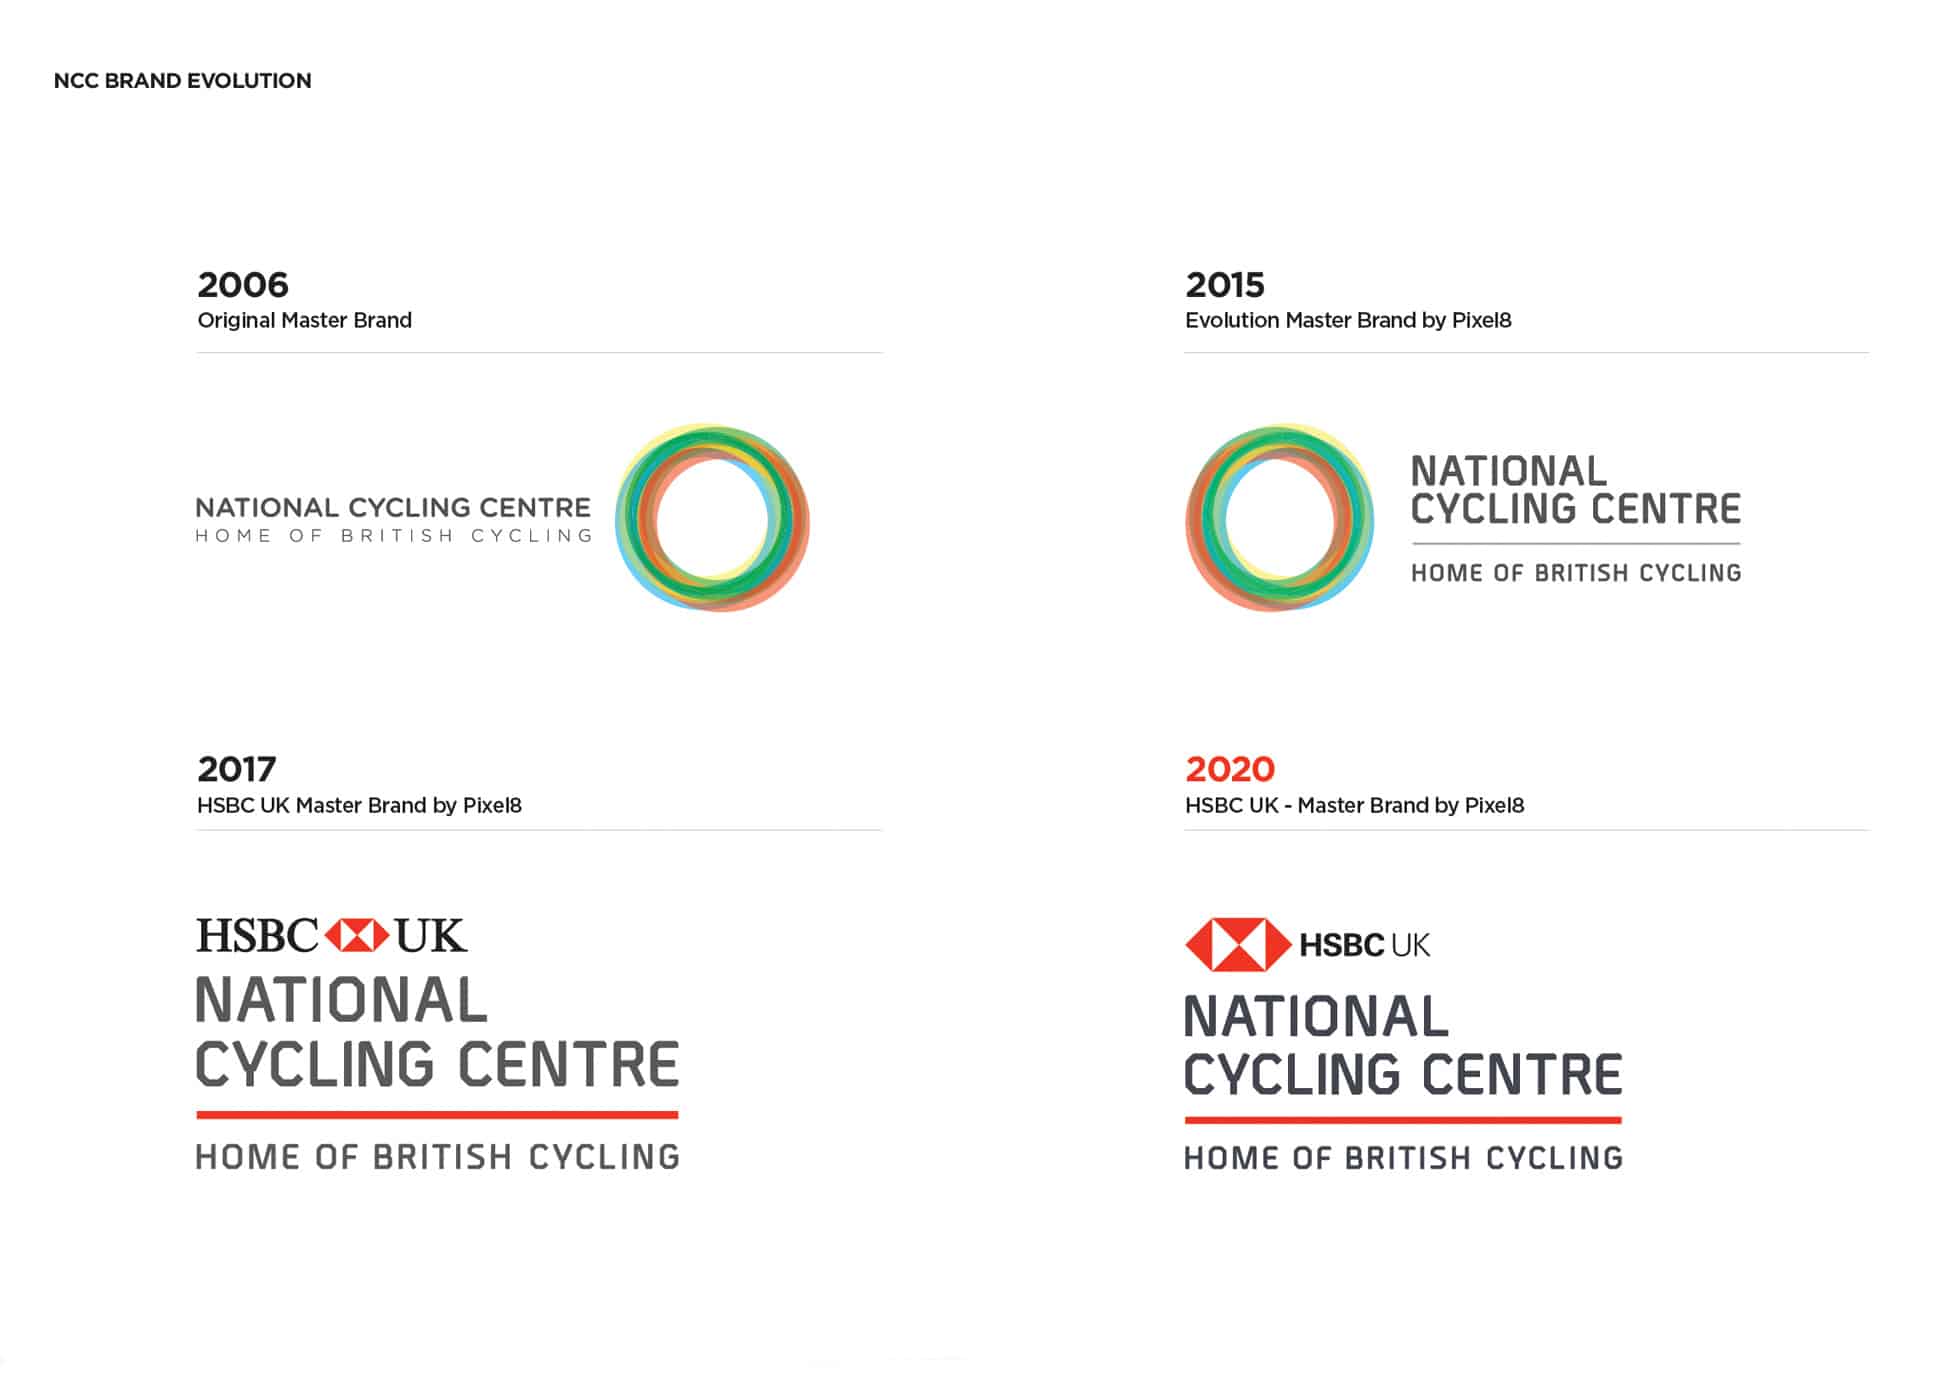 HSBC UK National Cycling Centre Brand Evolution